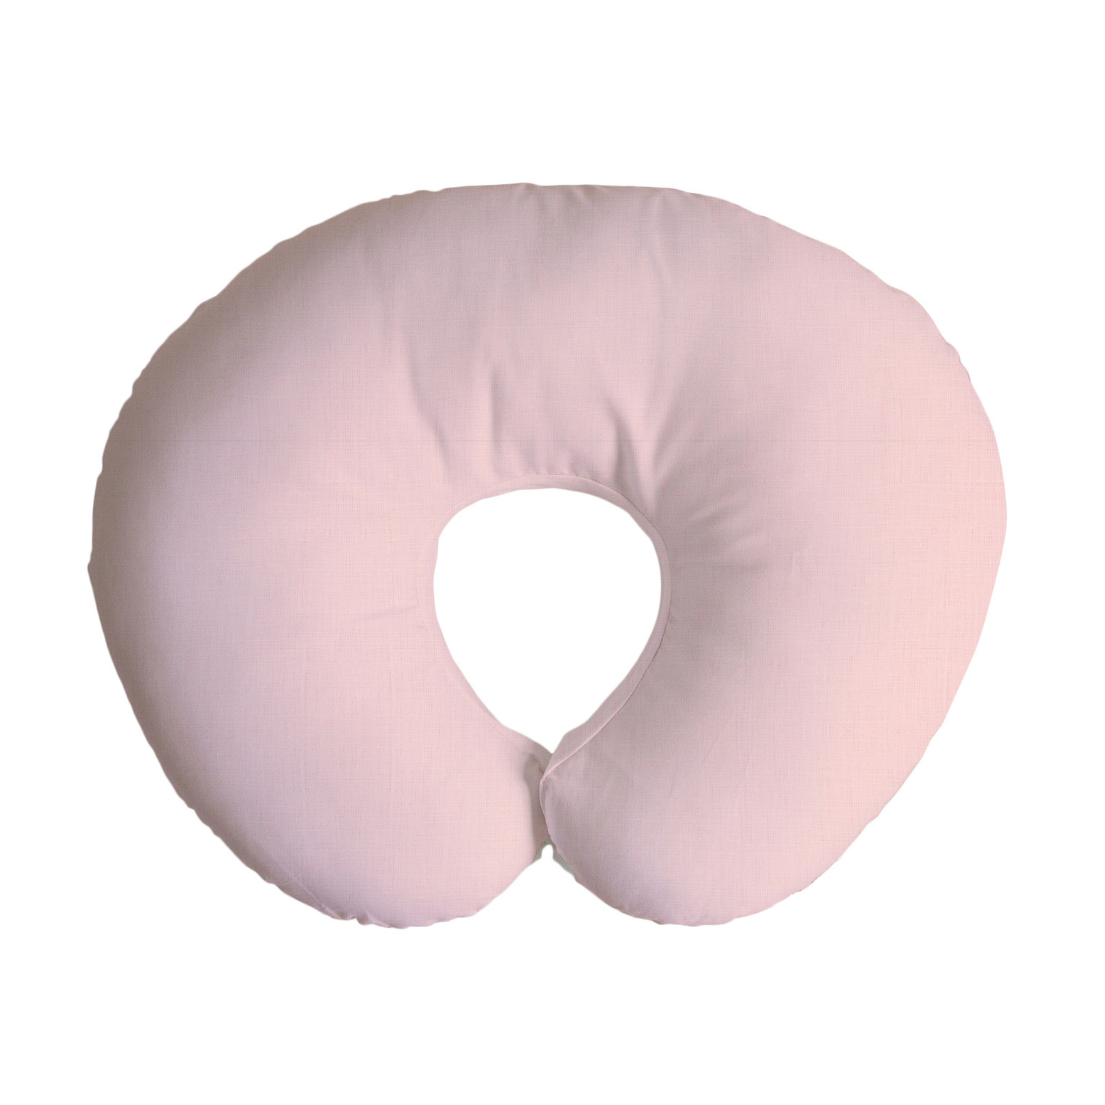 Cover for Feeding Pillow - white light solid, Nursery